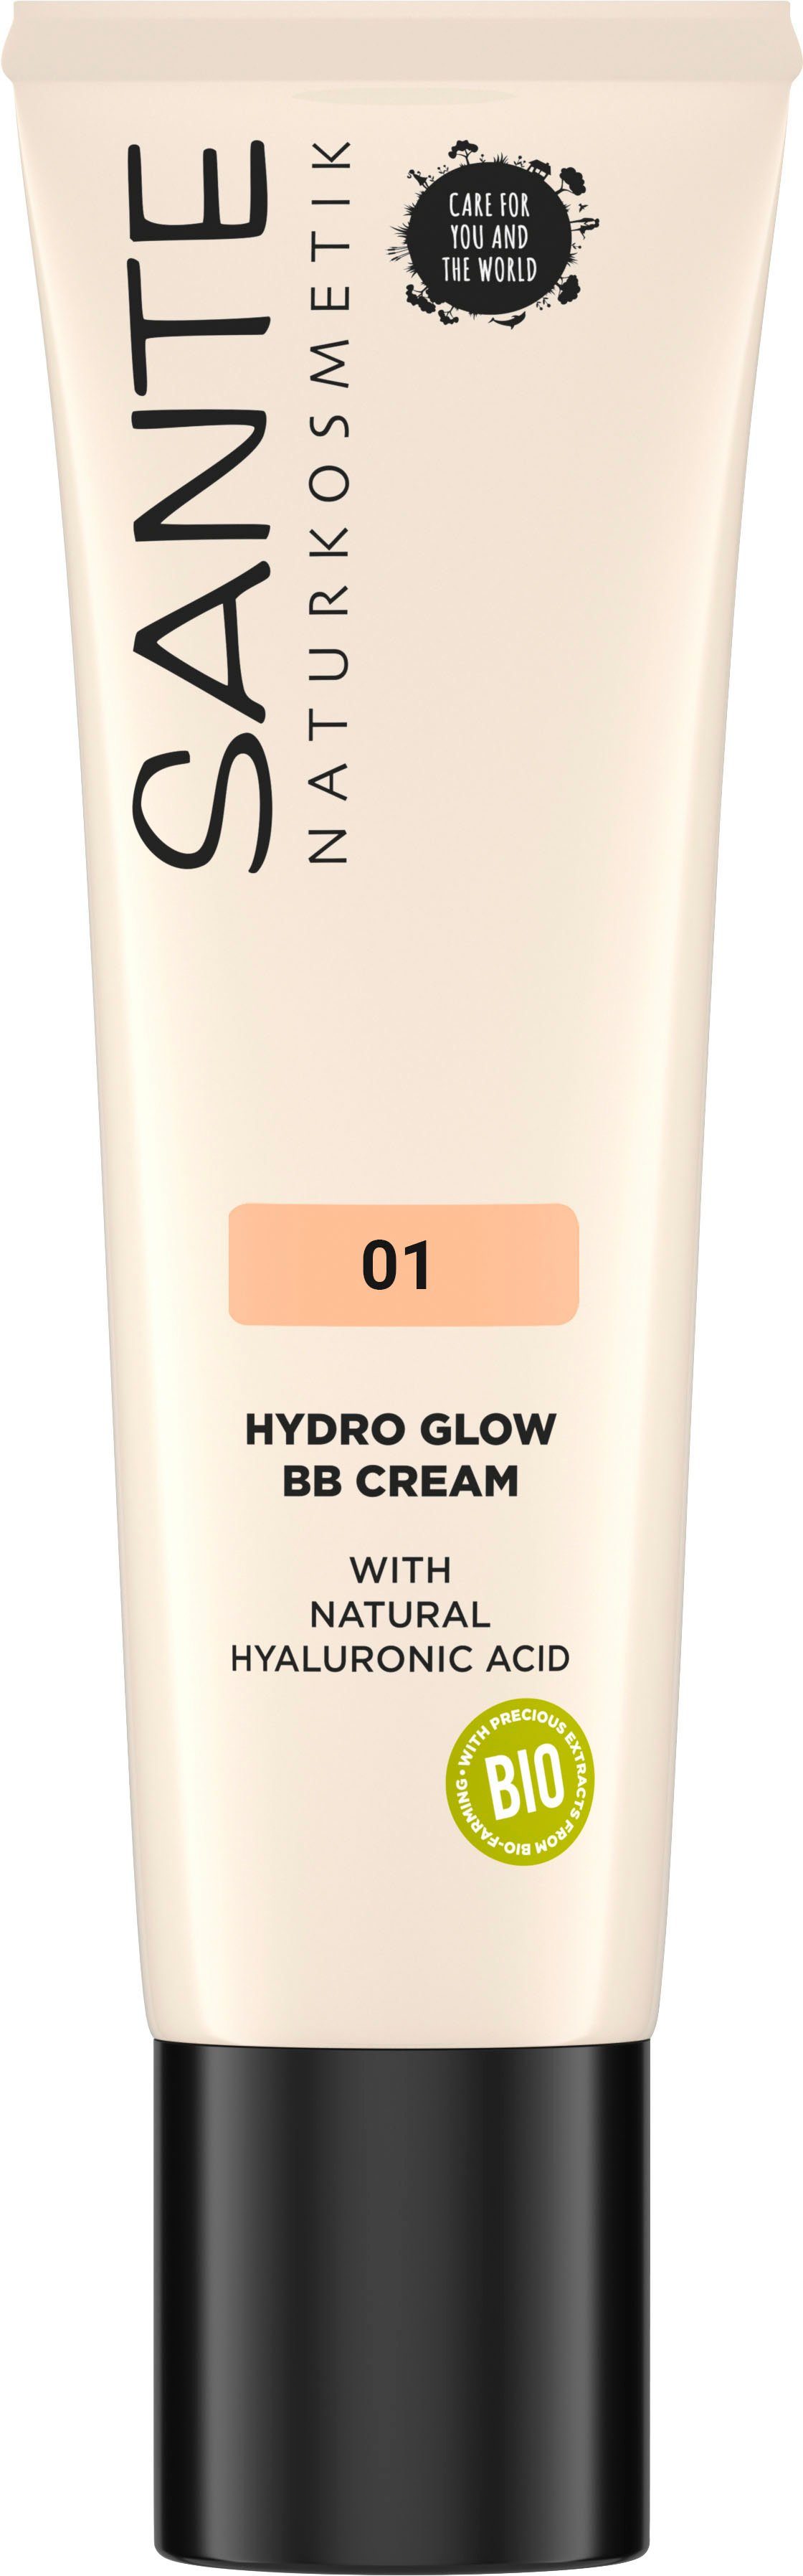 01 Hydro BB SANTE Light-Medium Glow Cream Sante Make-up